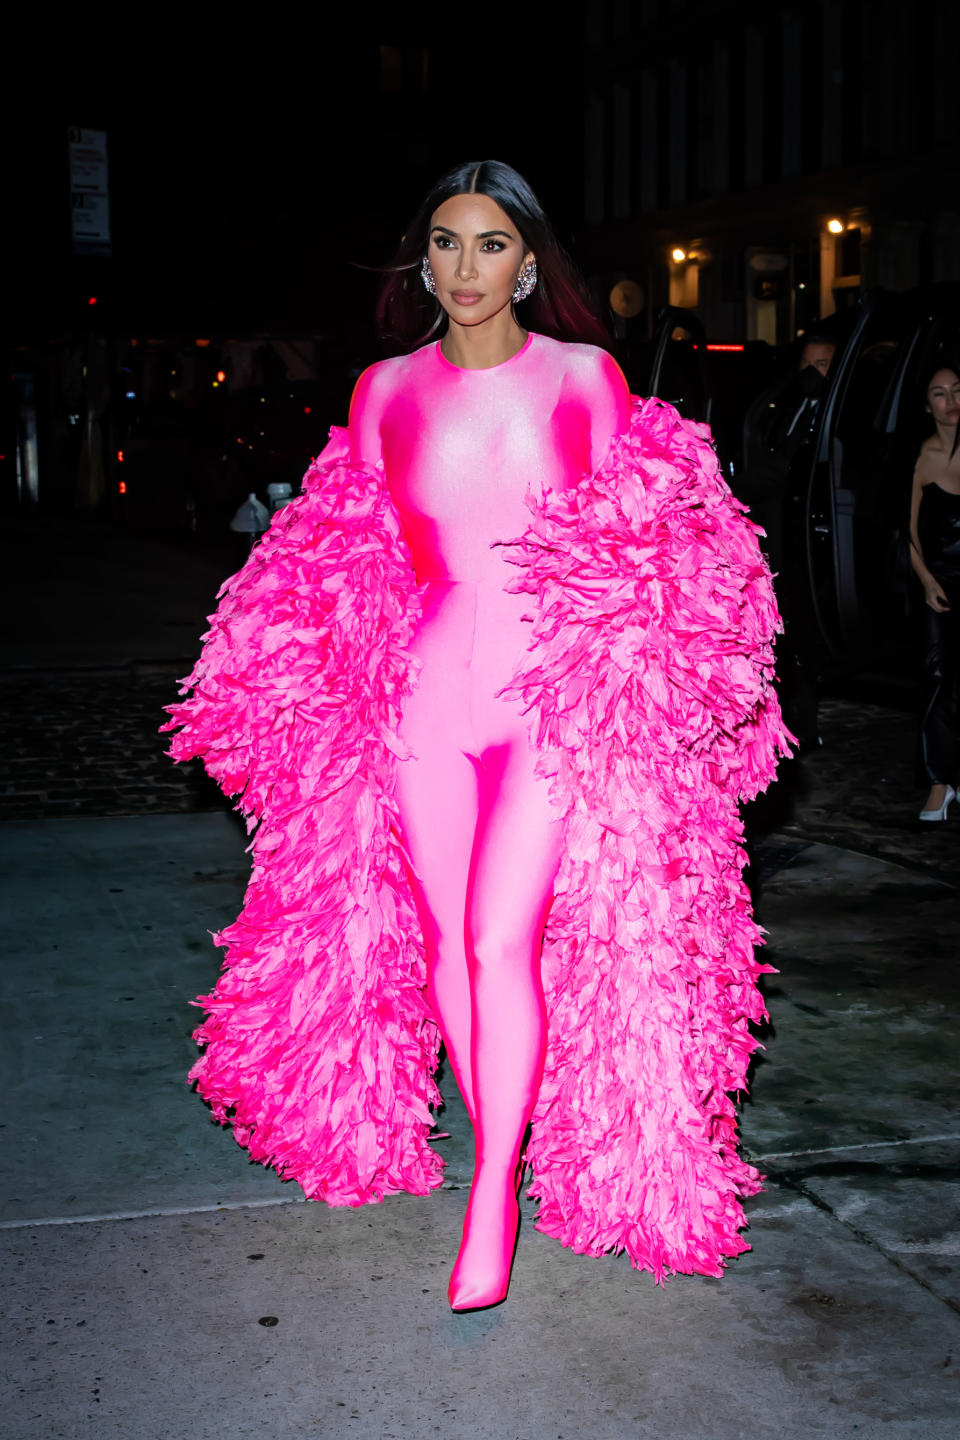 Kim Kardashian celebrates hosting ‘Saturday Night Live’ with an afterparty at Zero Bond in New York City. - Credit: @TheHapaBlonde / SplashNews.com